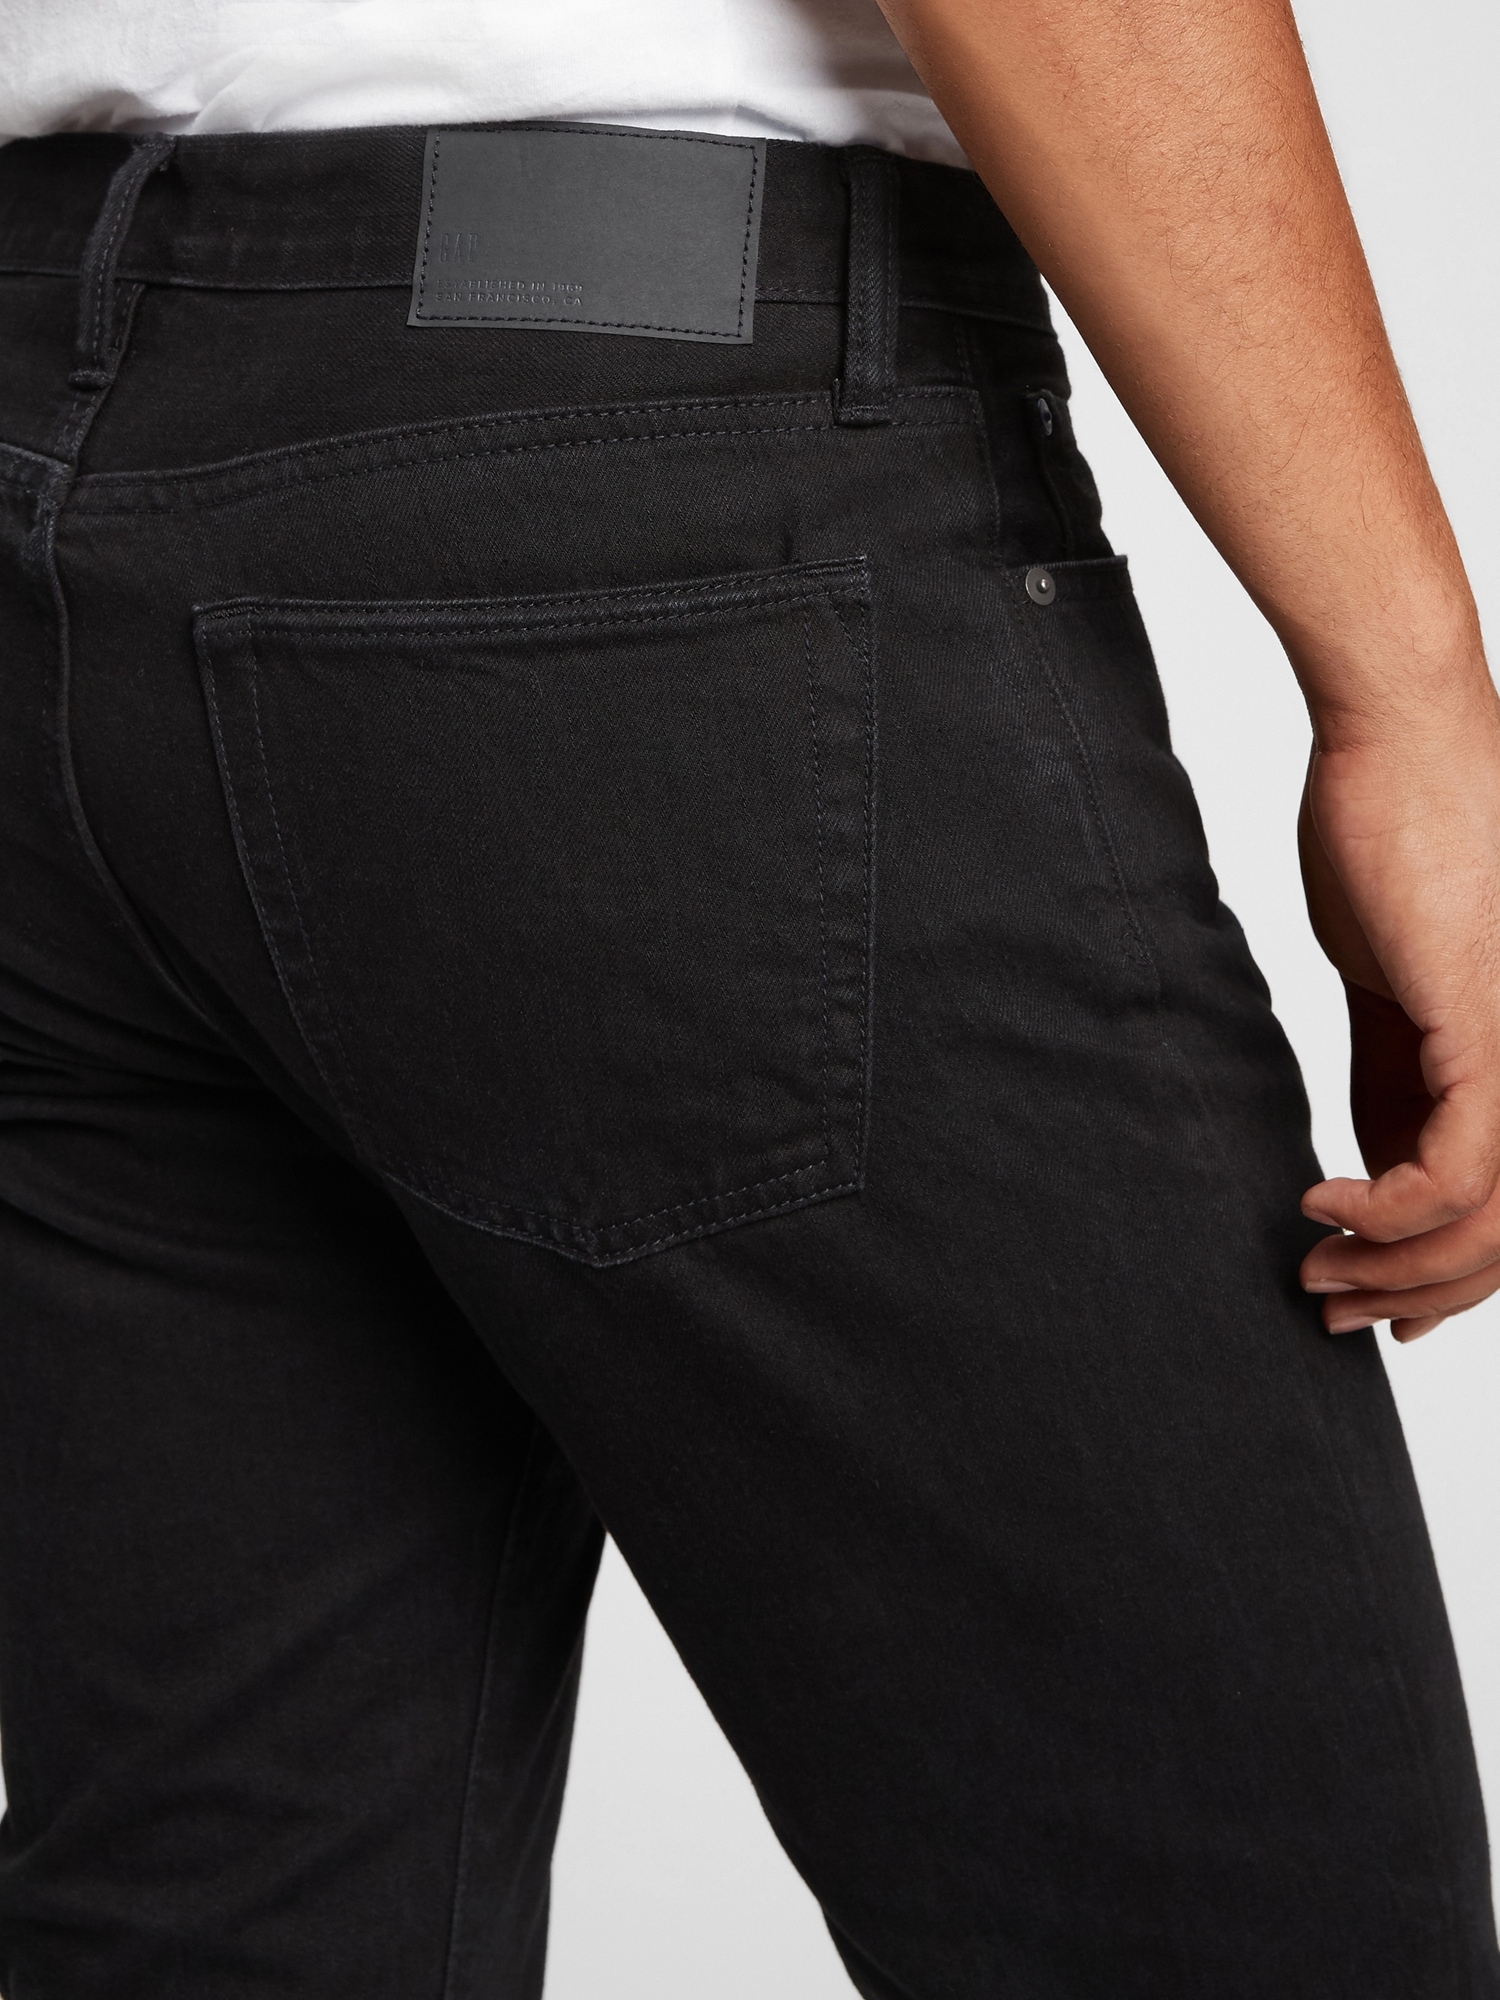 Men's Straight Jeans in Gapflex by Gap Rinse Size 36W